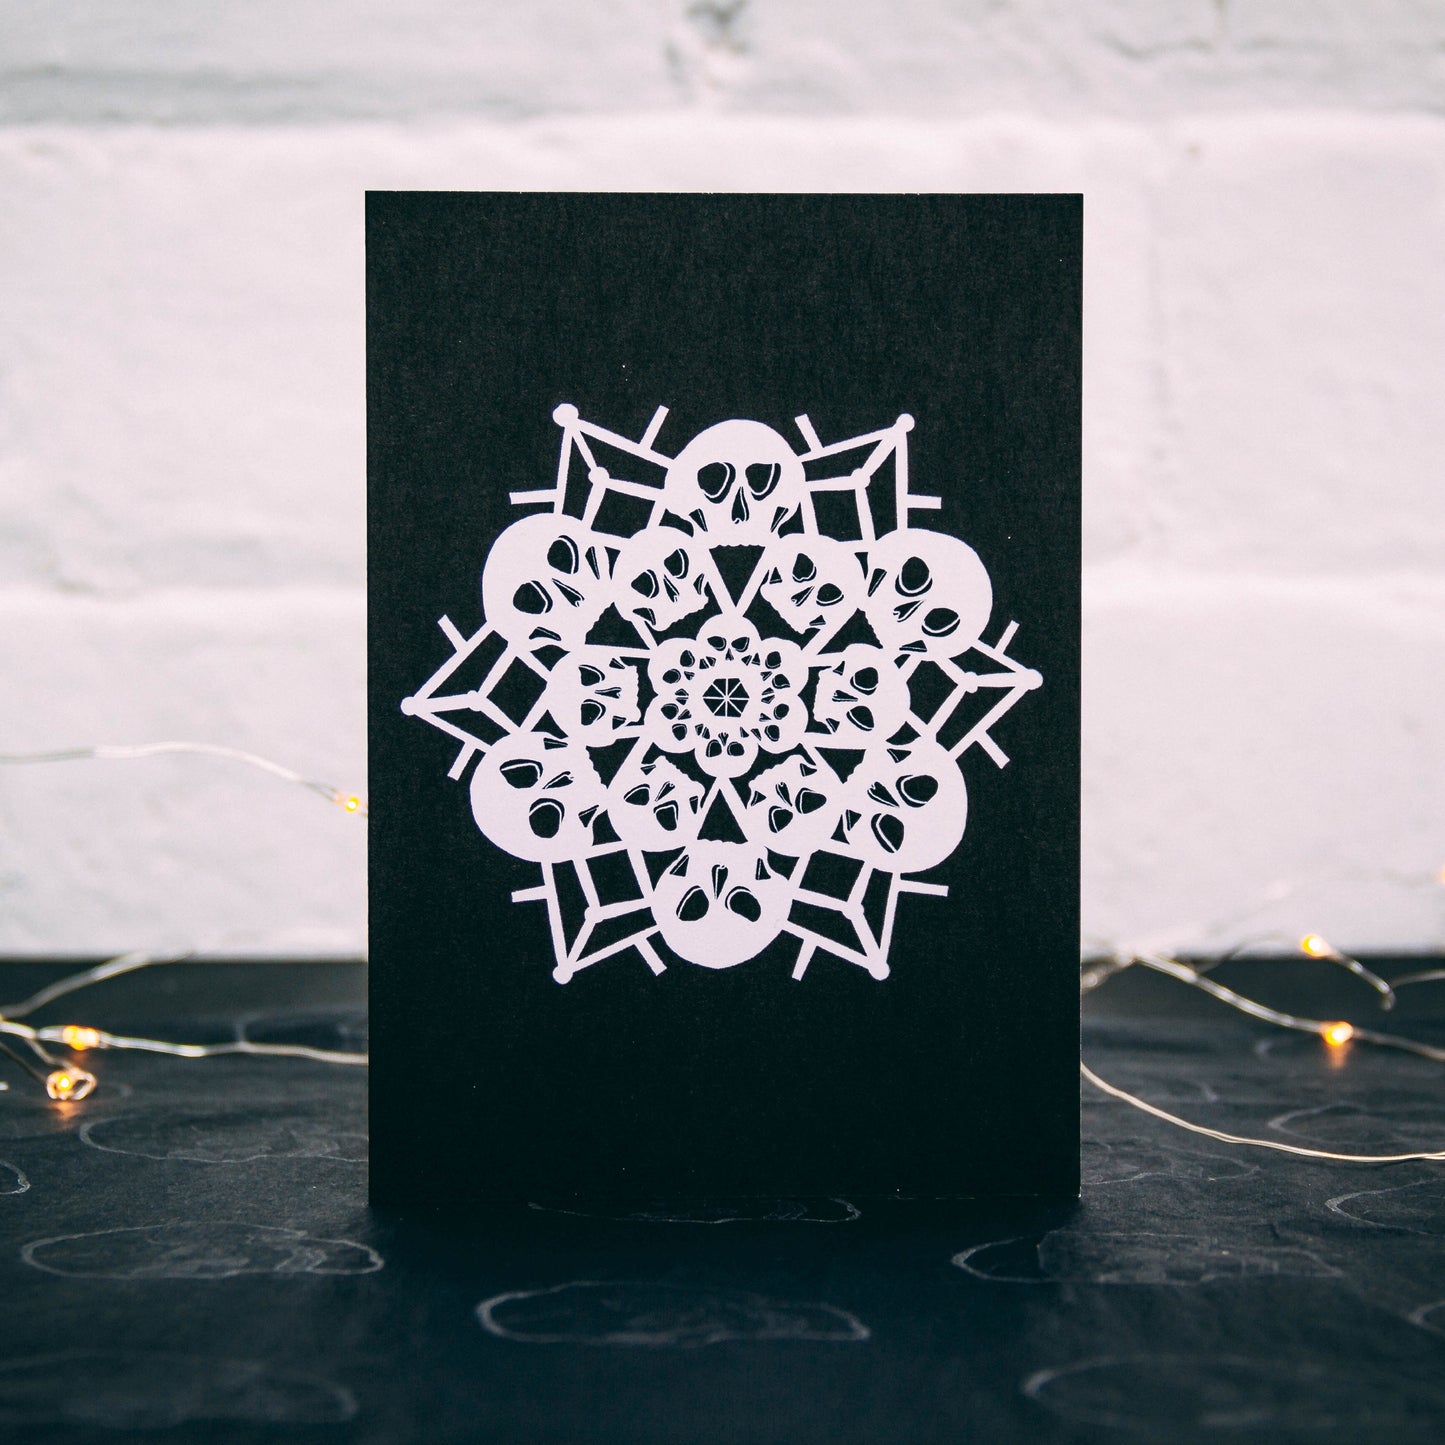 White snowflake made of skulls on black background, christmas card by wayward